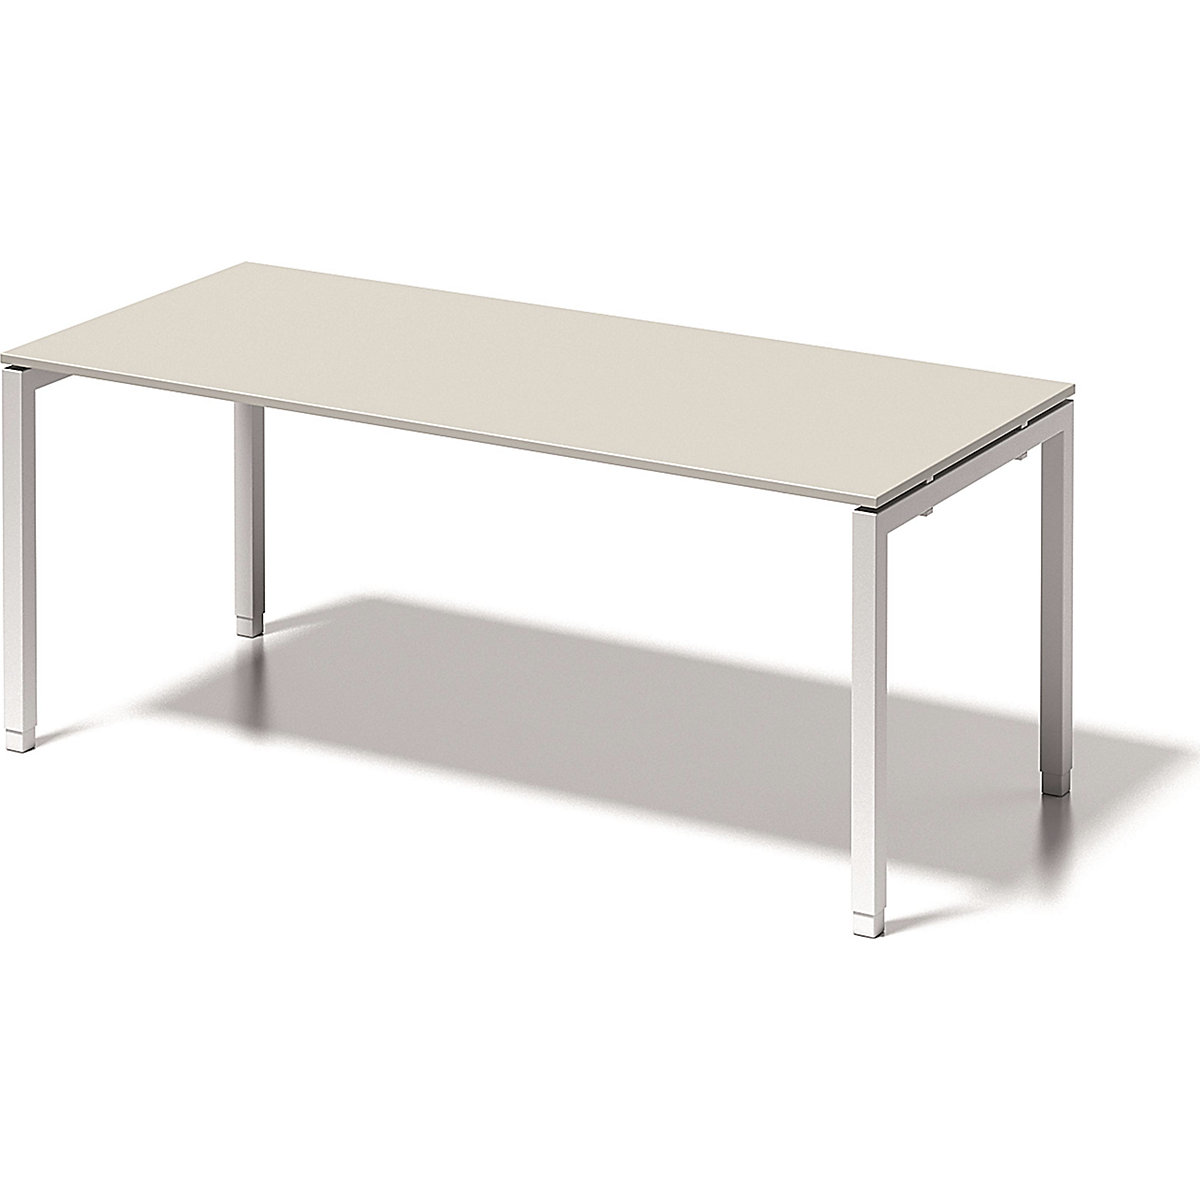 CITO desk, U-frame – BISLEY, HxWxD 650 – 850 x 1800 x 800 mm, white frame, grey white tabletop-3